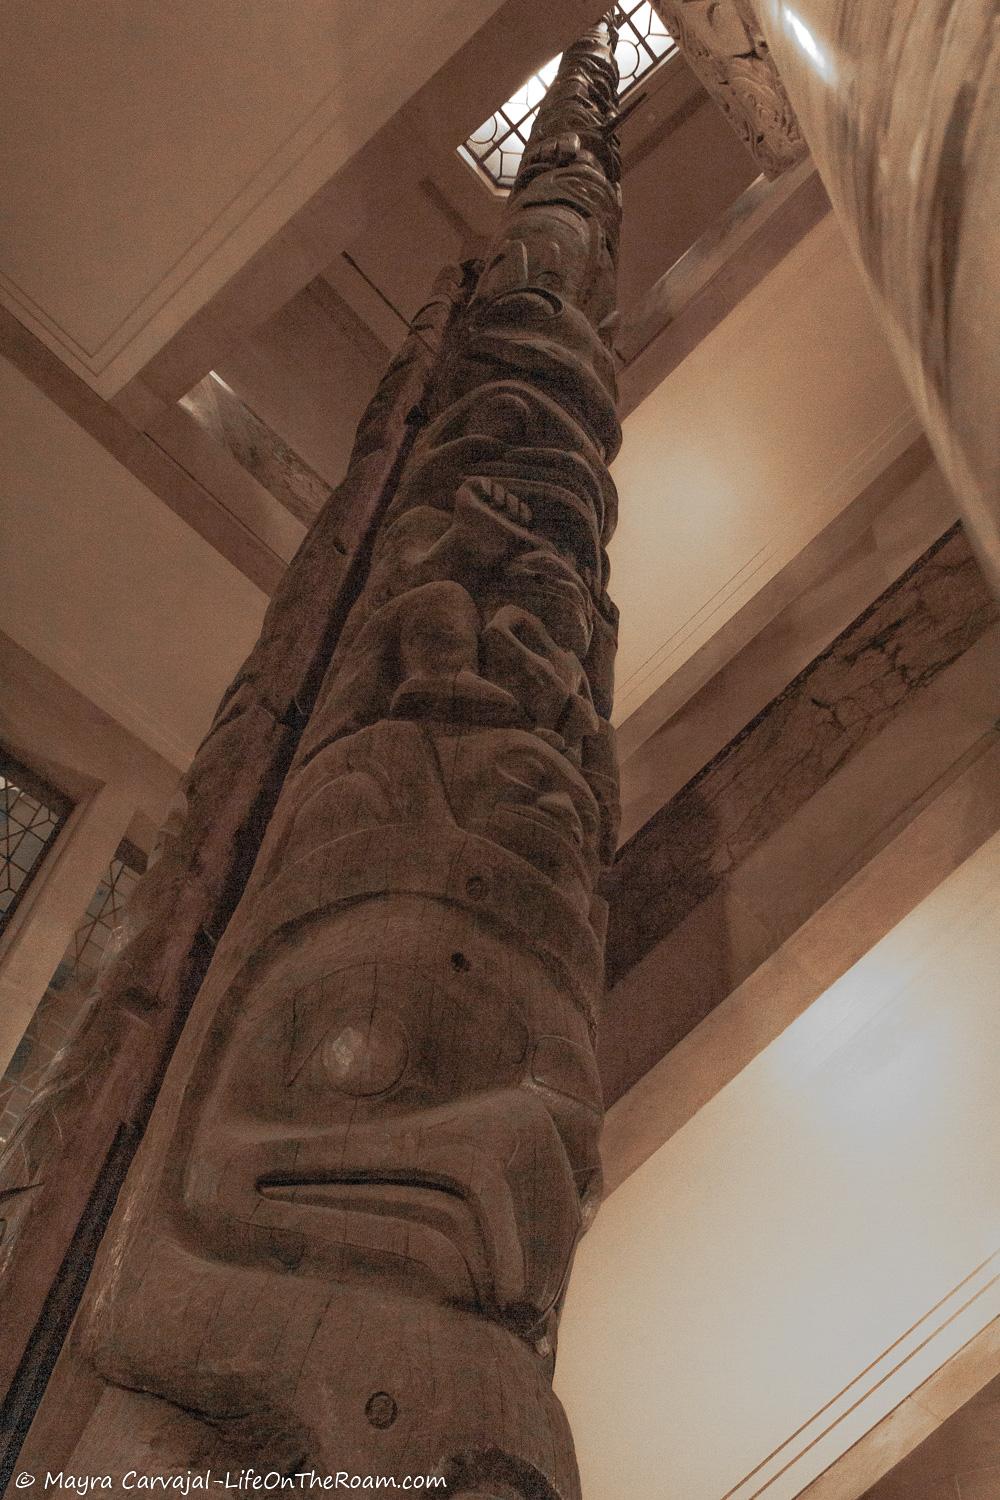 A tall totem pole inside a building